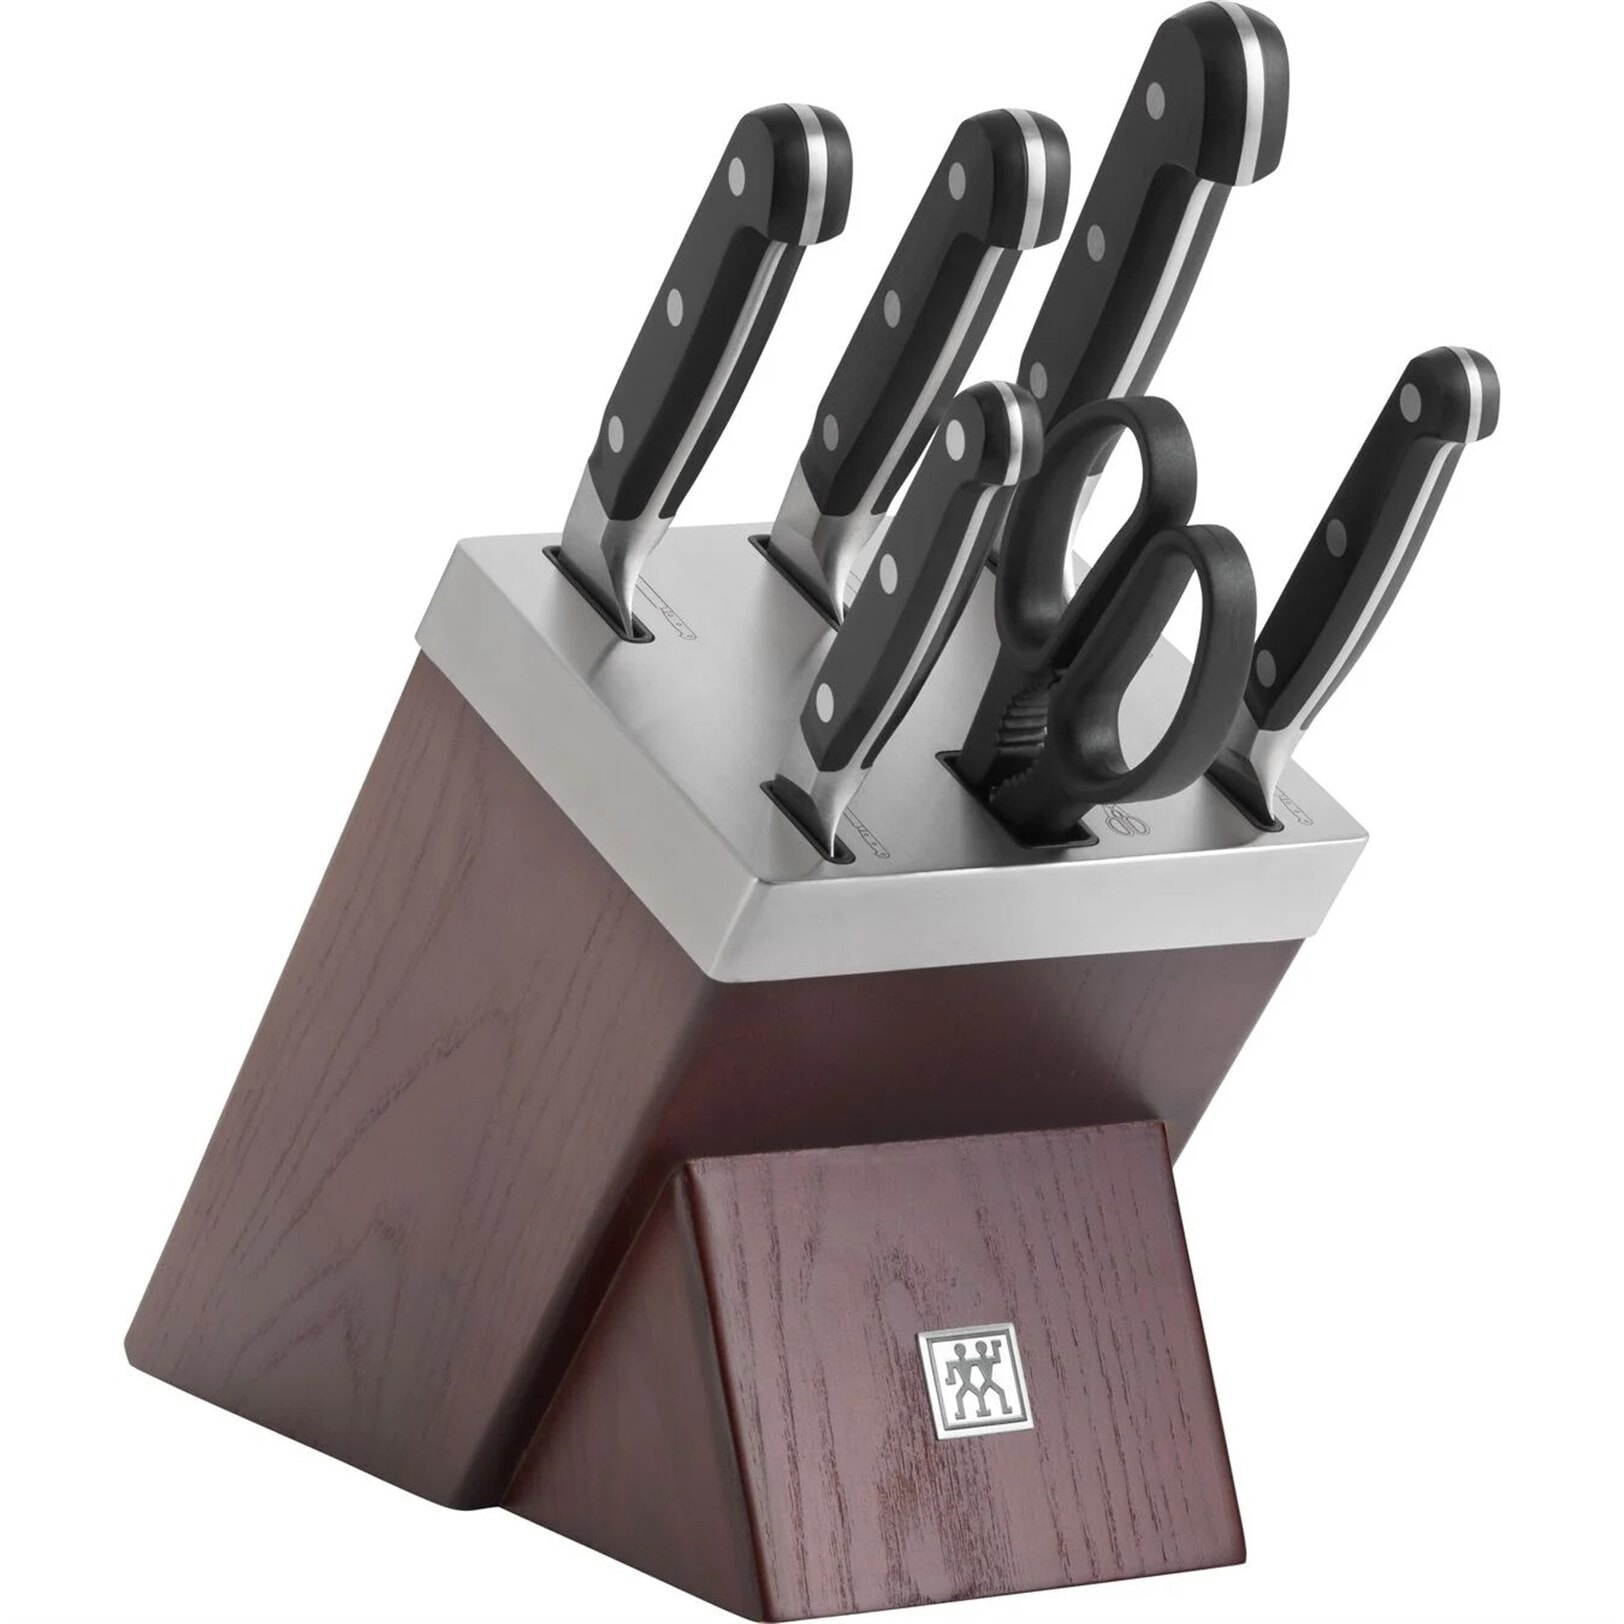 Zwilling Pro - Knife/cutlery block set - Stainless steel - Plastic - Wood - Wood - Black